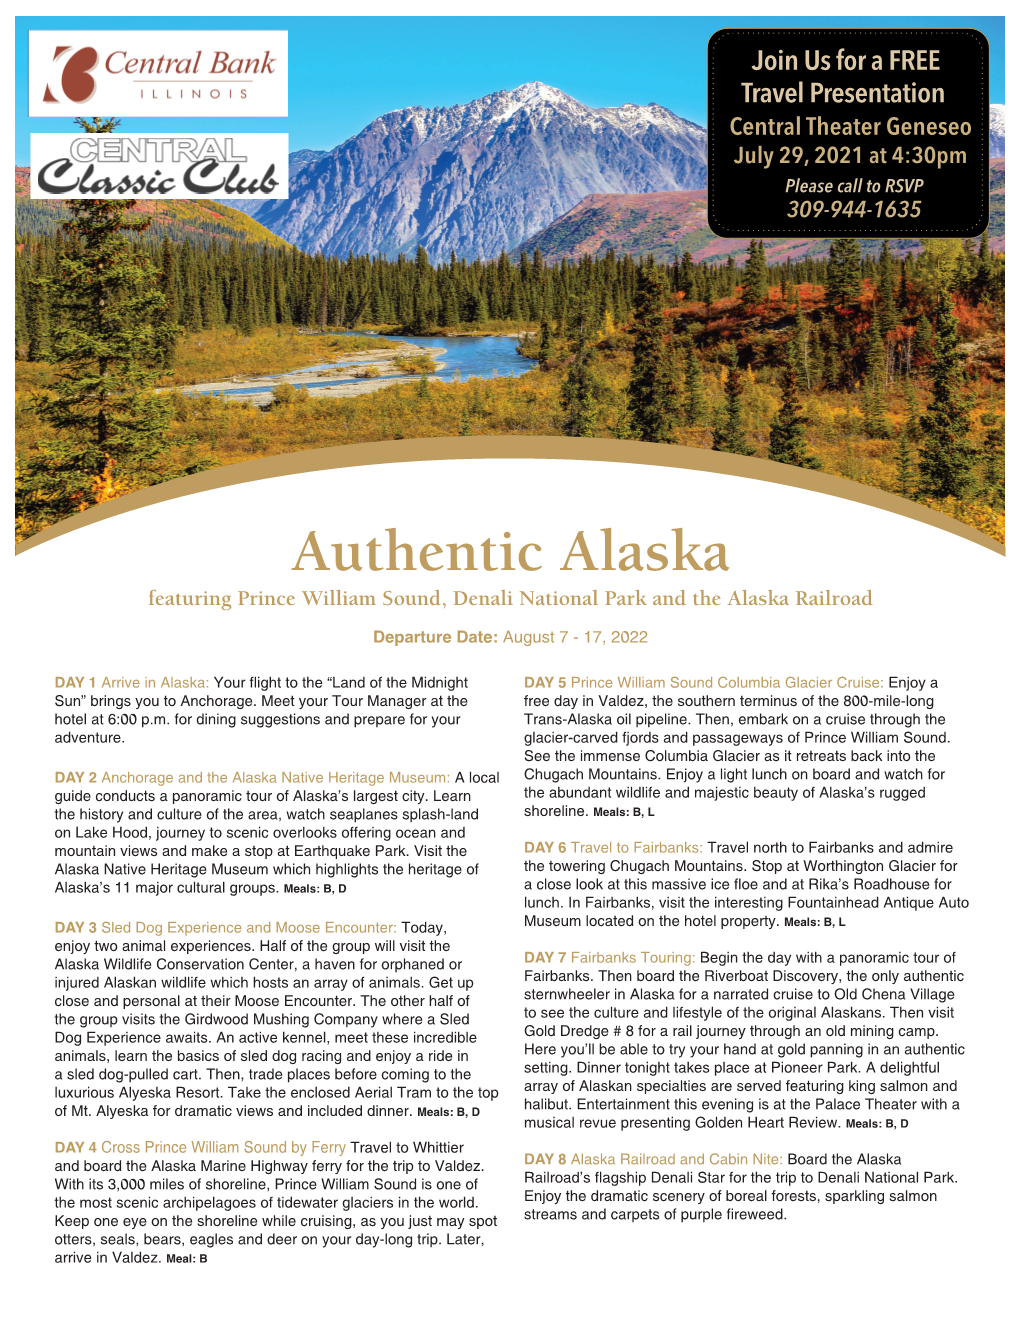 Authentic Alaska Featuring Prince William Sound, Denali National Park and the Alaska Railroad